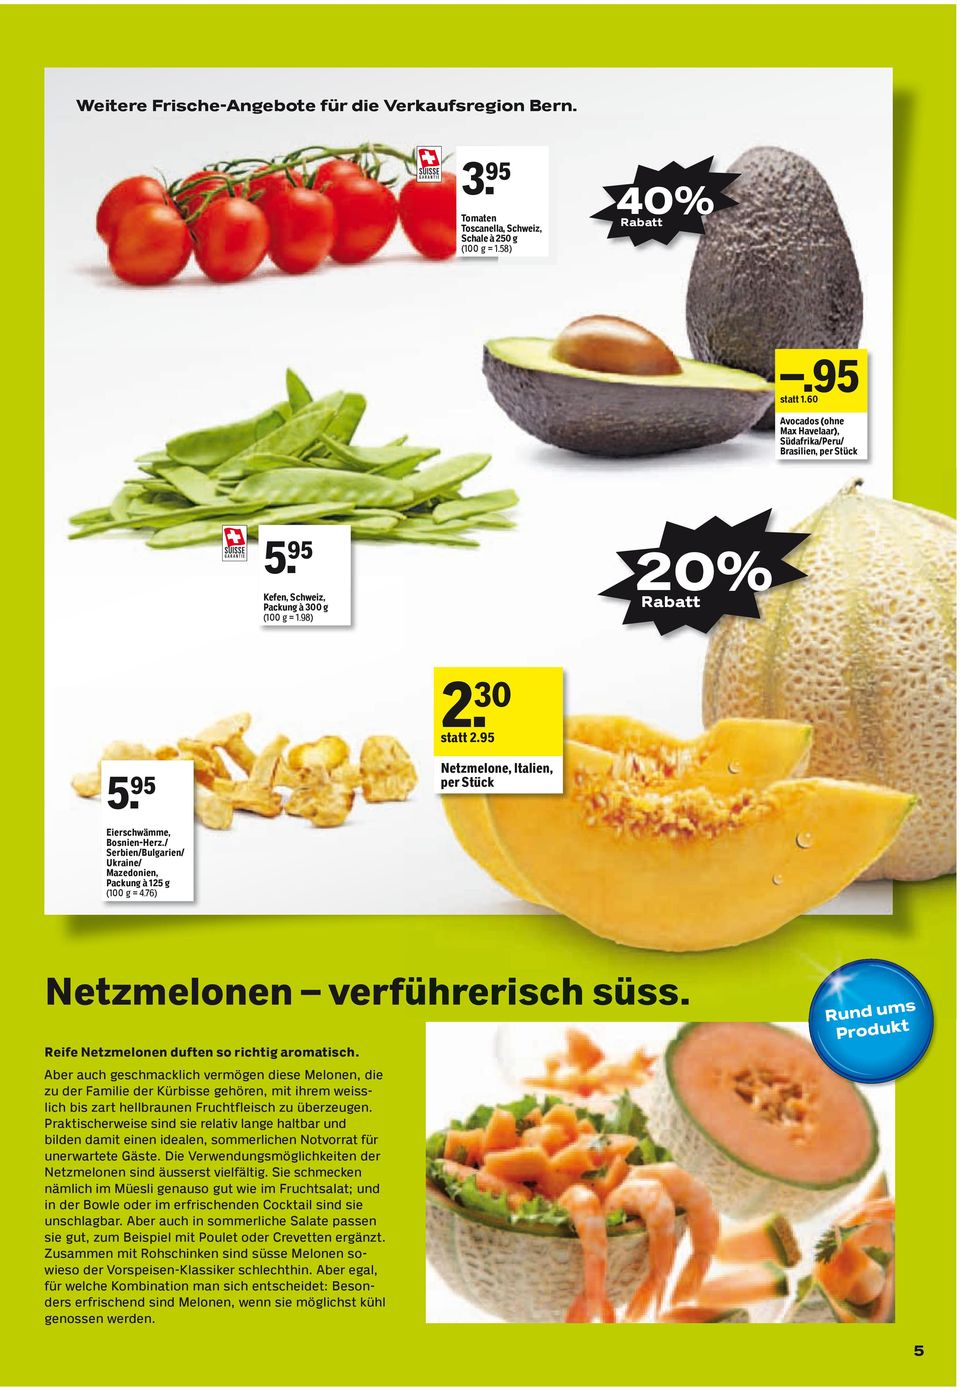 95 Netzmelone, Italien, per Stück Eierschwämme, Bosnien Herz./ Serbien/Bulgarien/ Ukraine/ Mazedonien, Packung à 125 g (100 g = 4.76) Netzmelonen verführerisch süss.